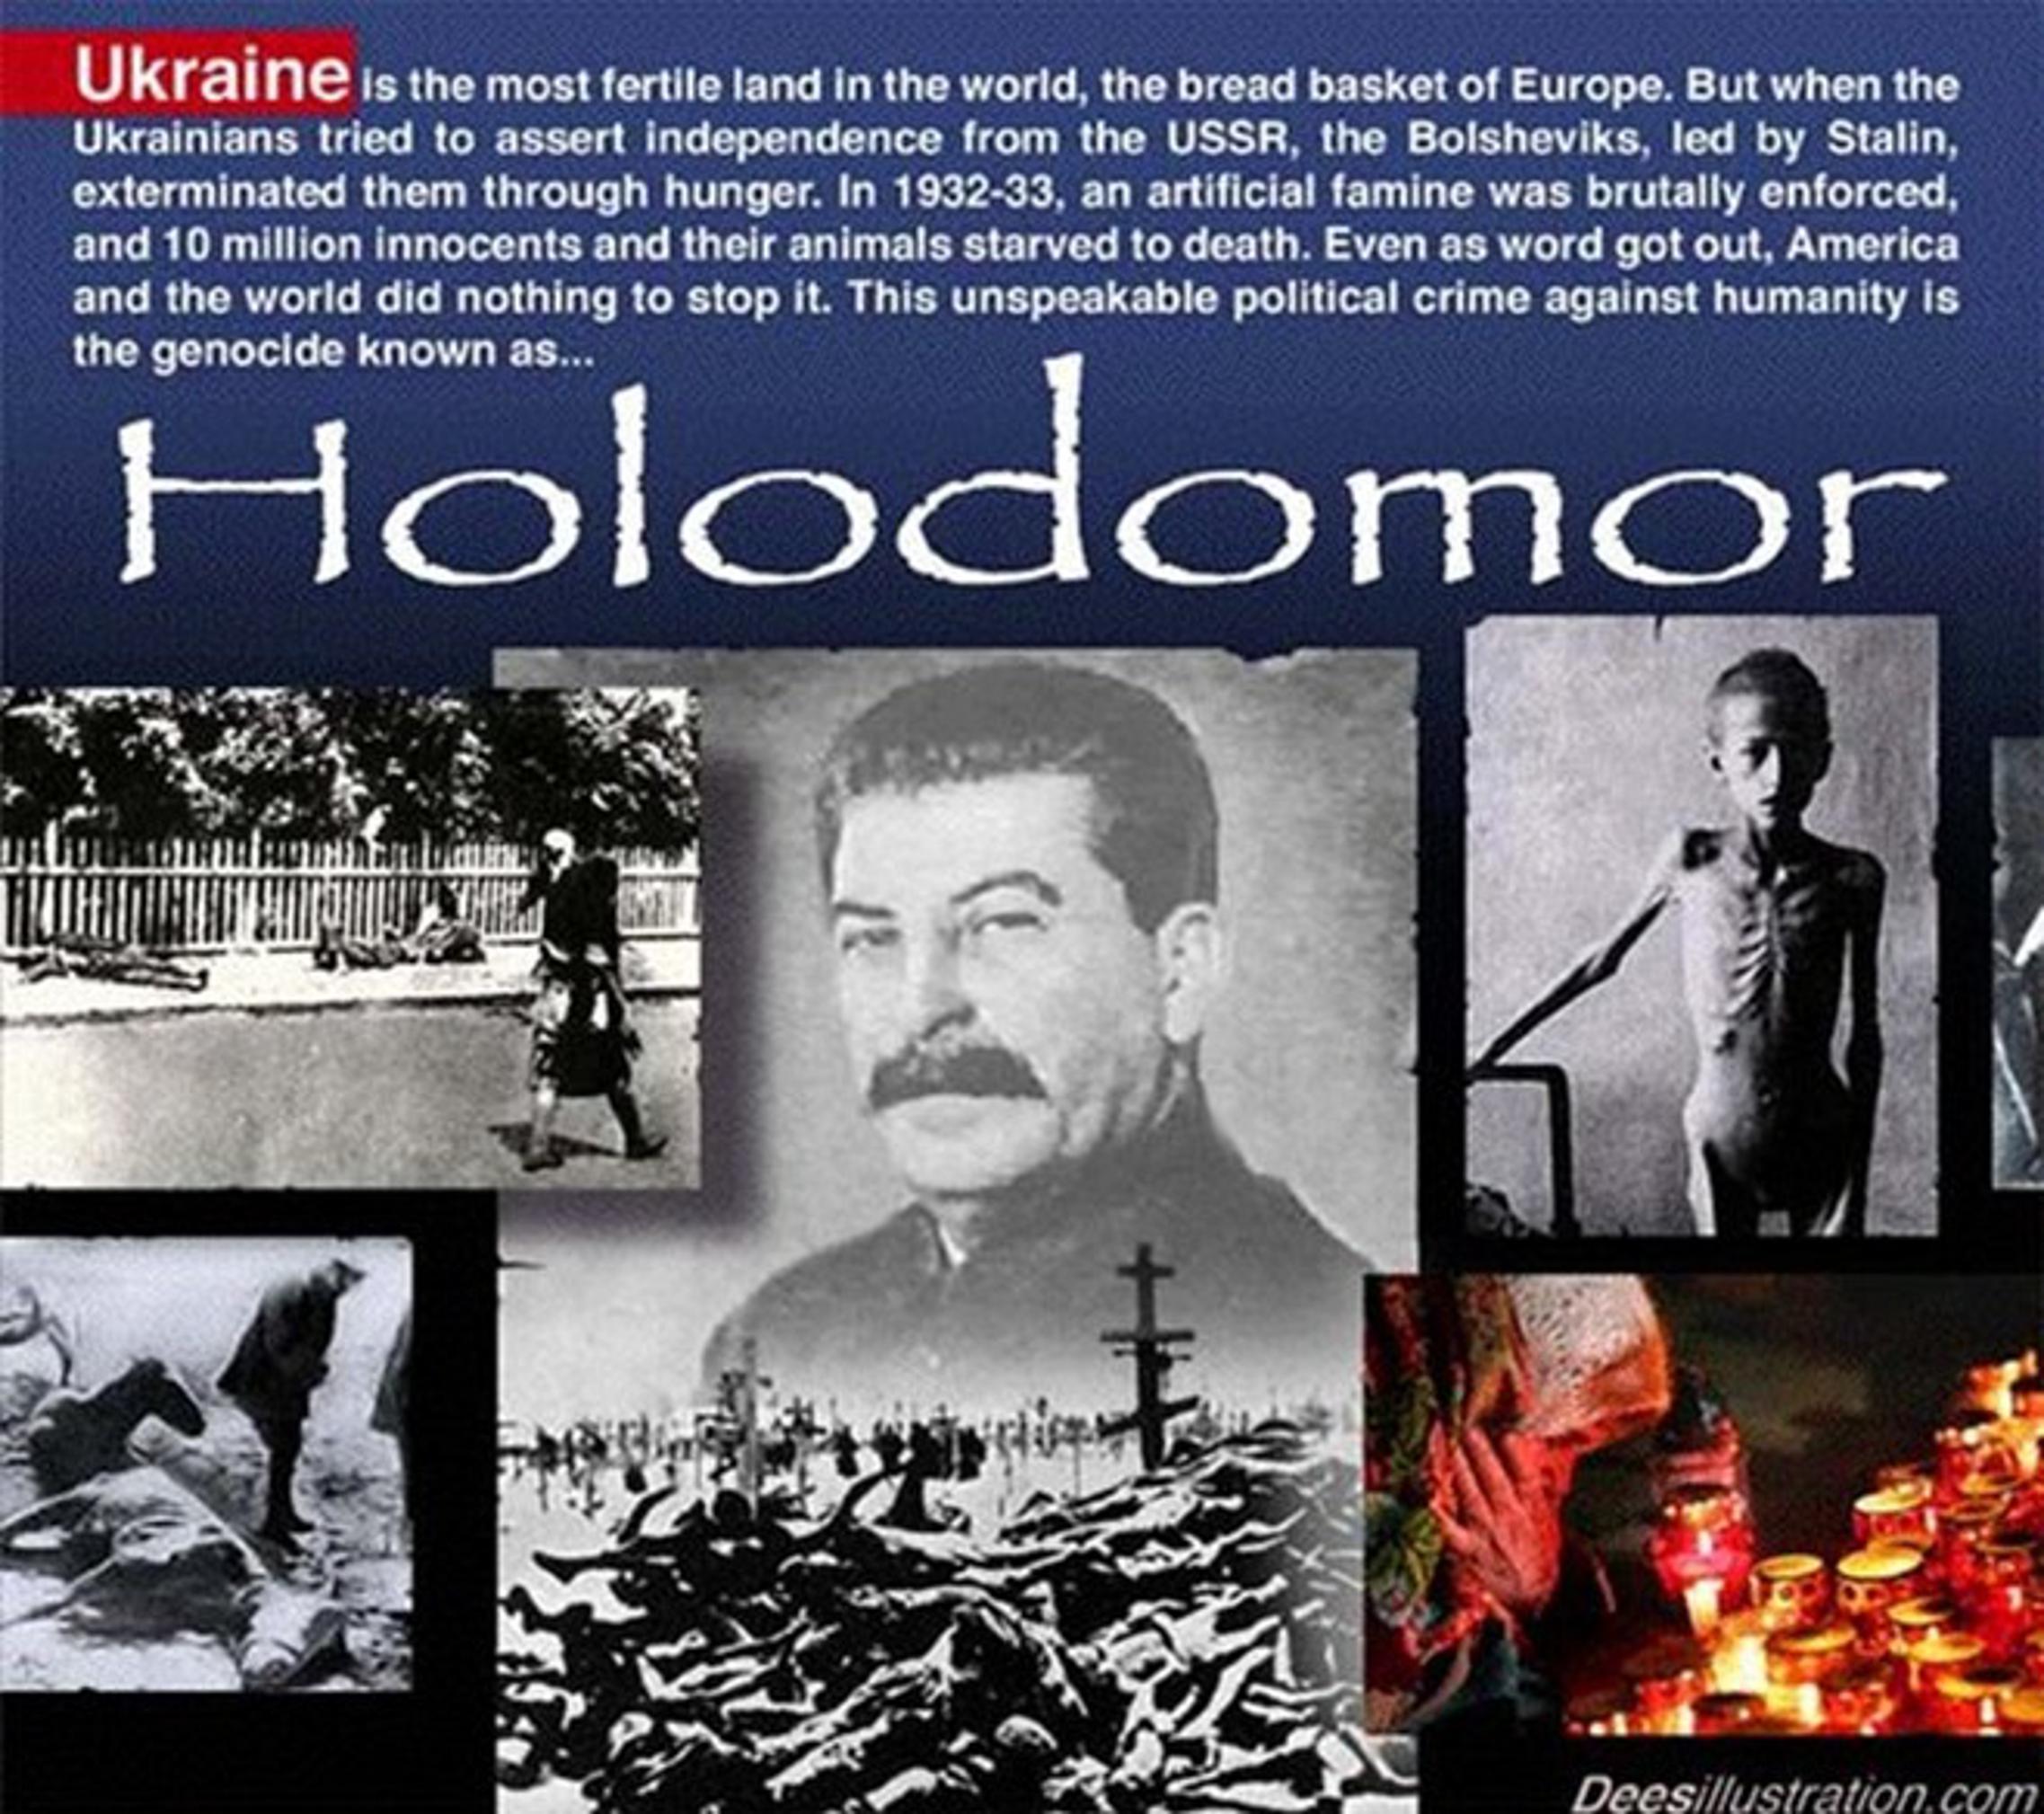 Holodomor ili na hrvatskom Gladomor 